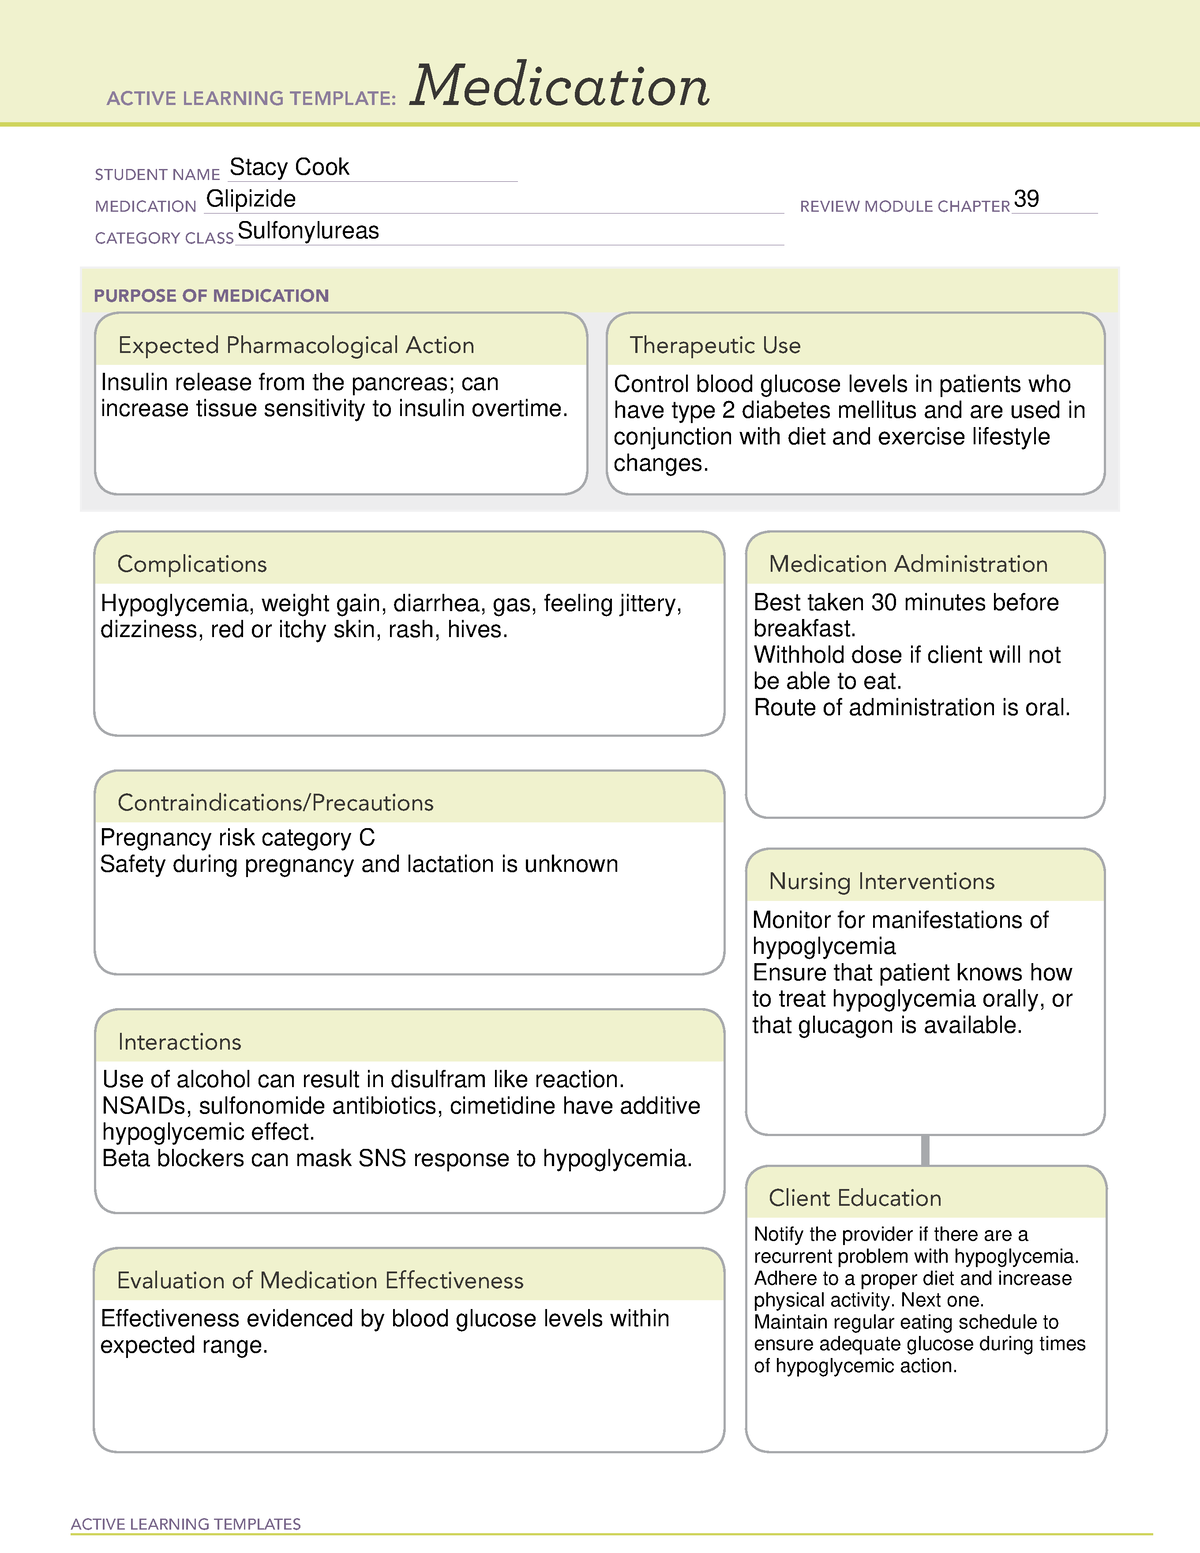 ati-medication-template-glipizide-active-learning-templates